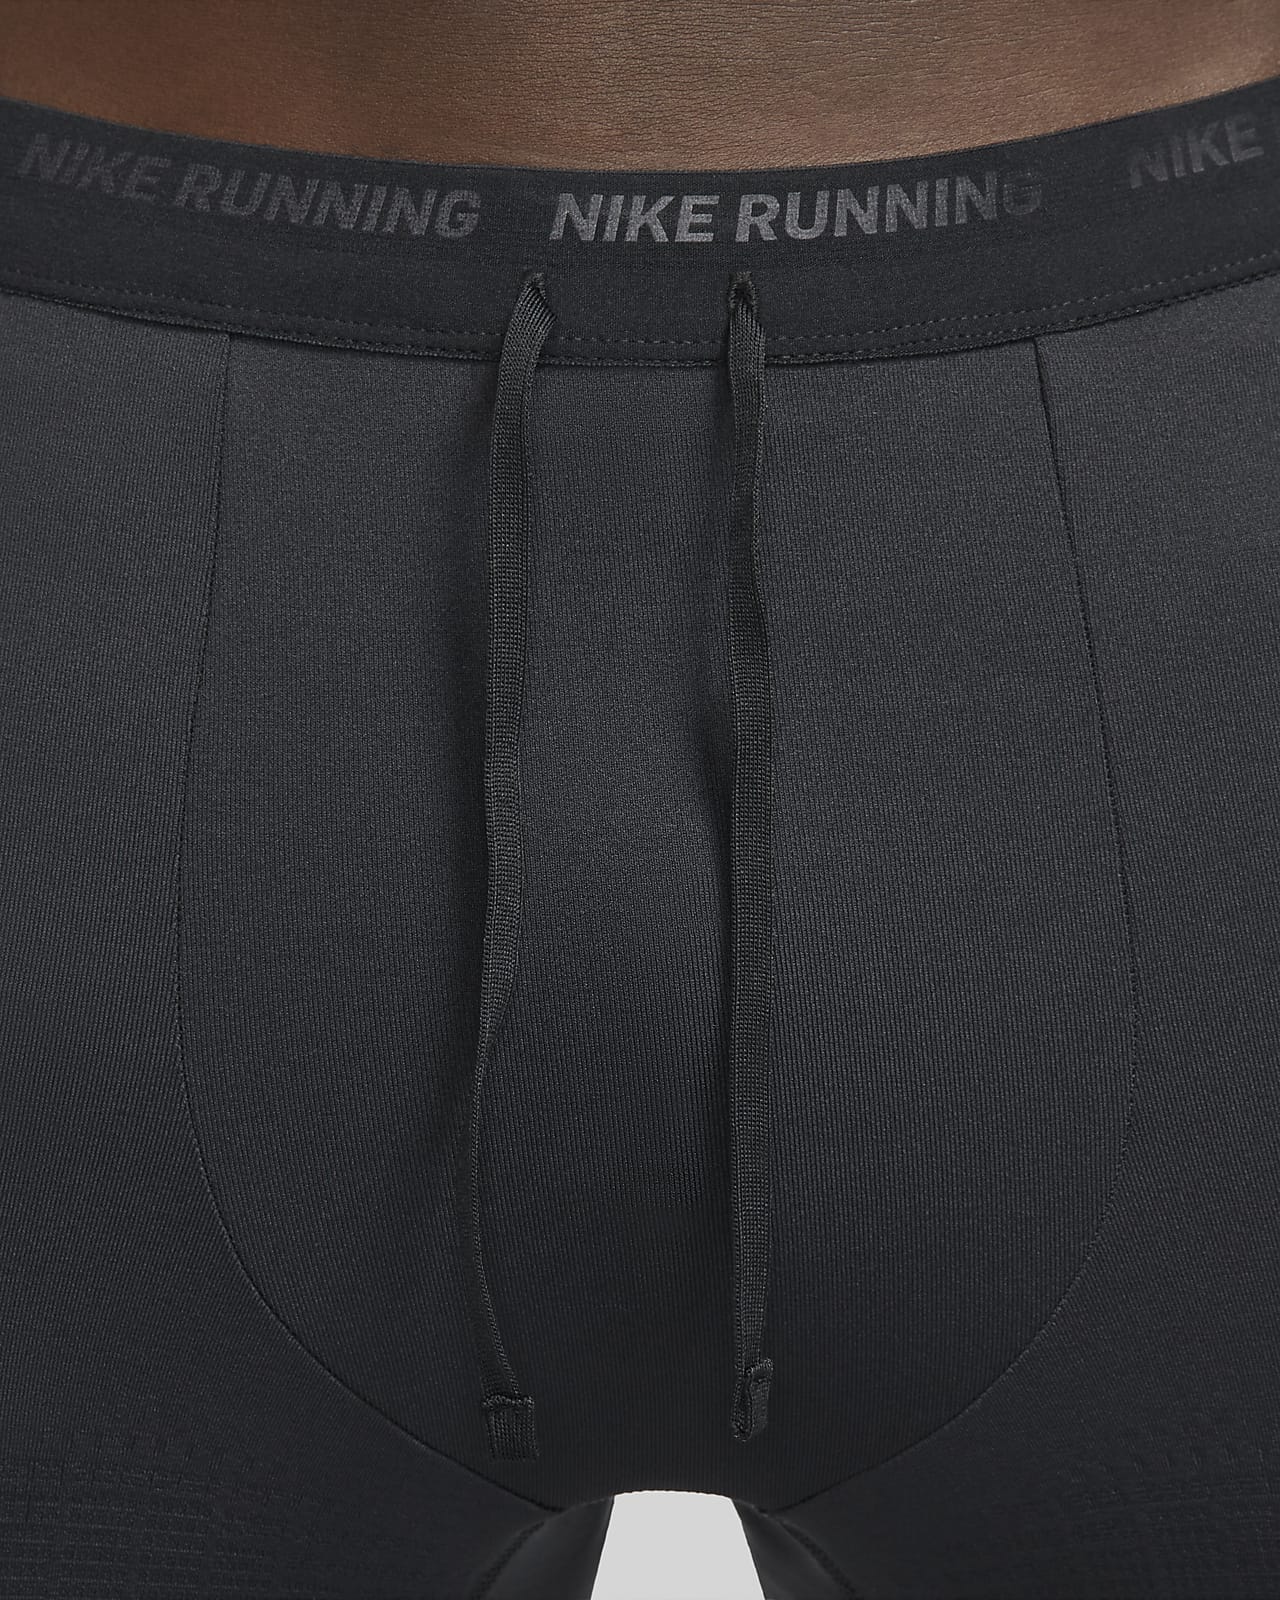 Nike Men's Power running half tights [black] bestellen bij Skate